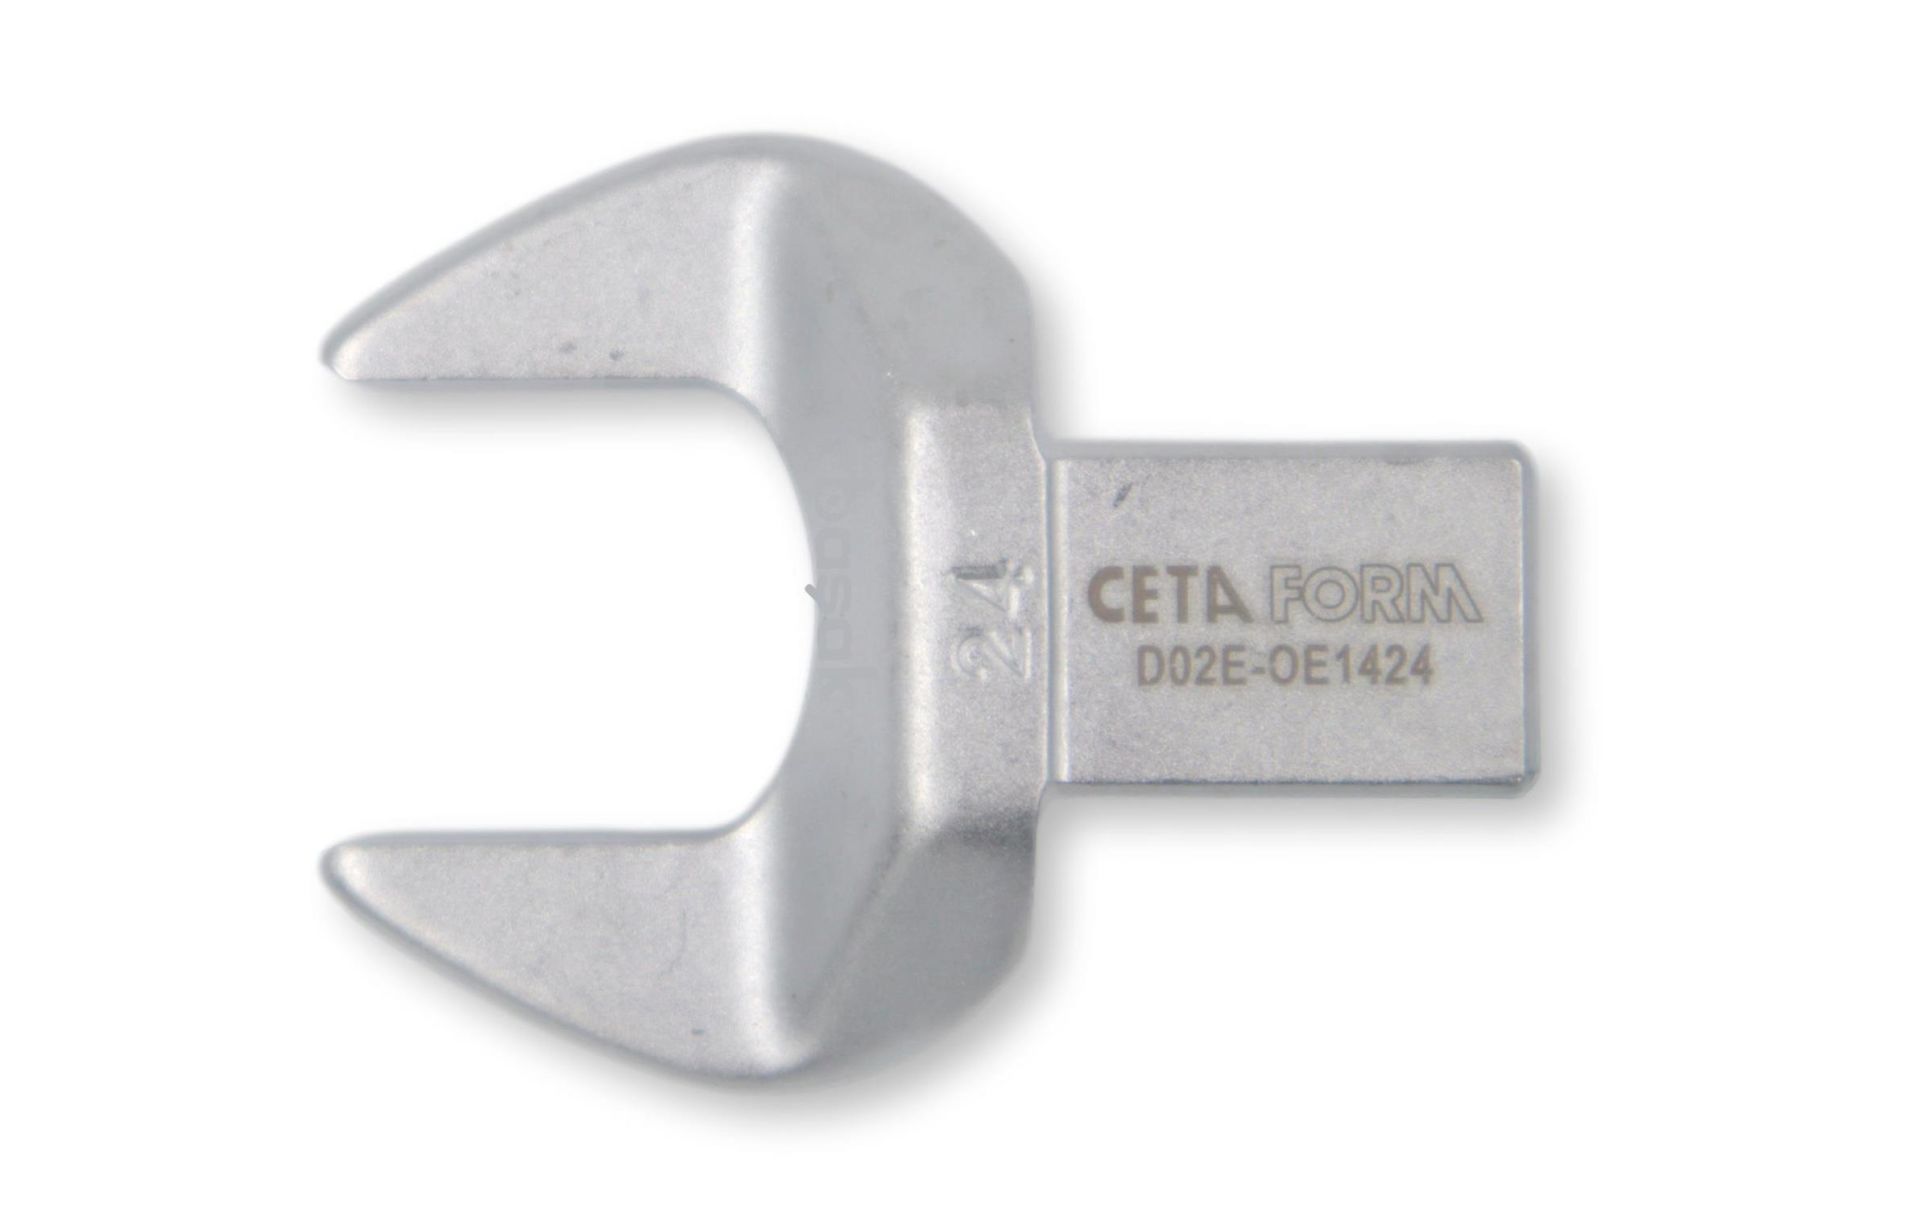 Ceta Form 24mm Açık Ağız Tork Anahtar Ucu (14x18mm) D02E-OE1424